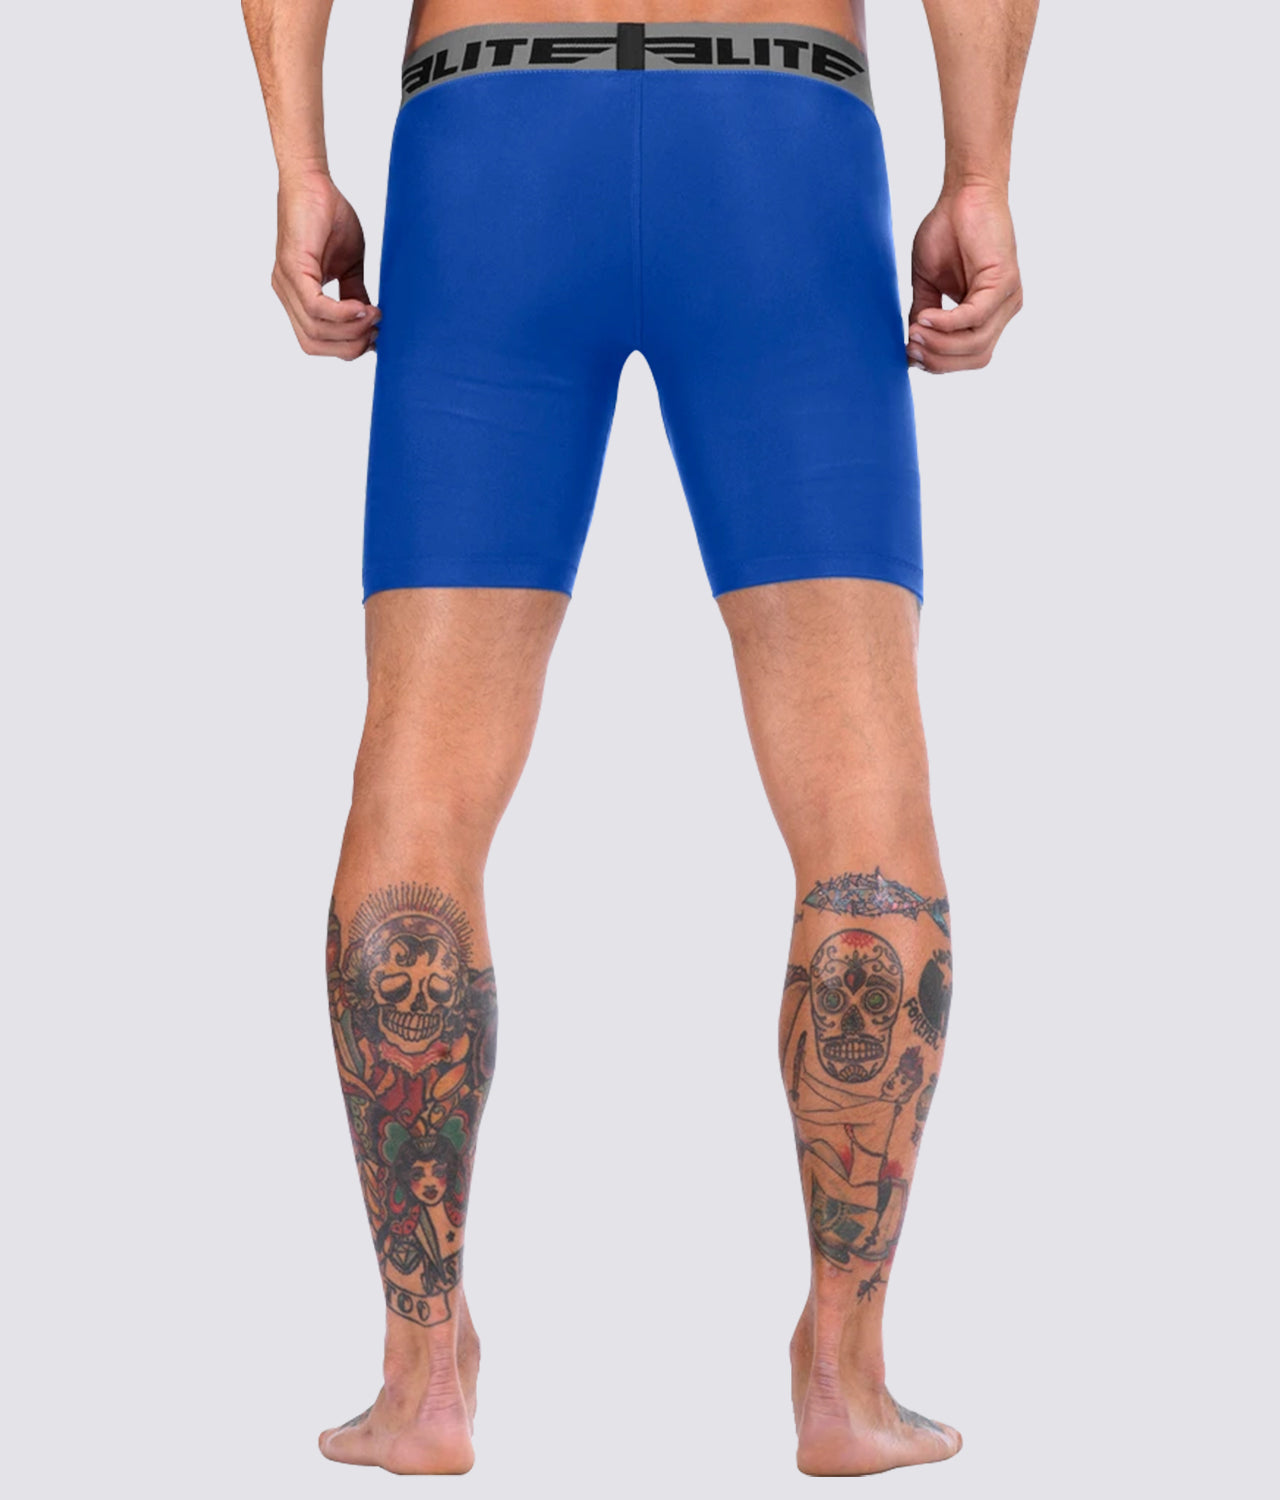 Elite Sports Flatlock Seams Blue Compression Muay Thai Shorts